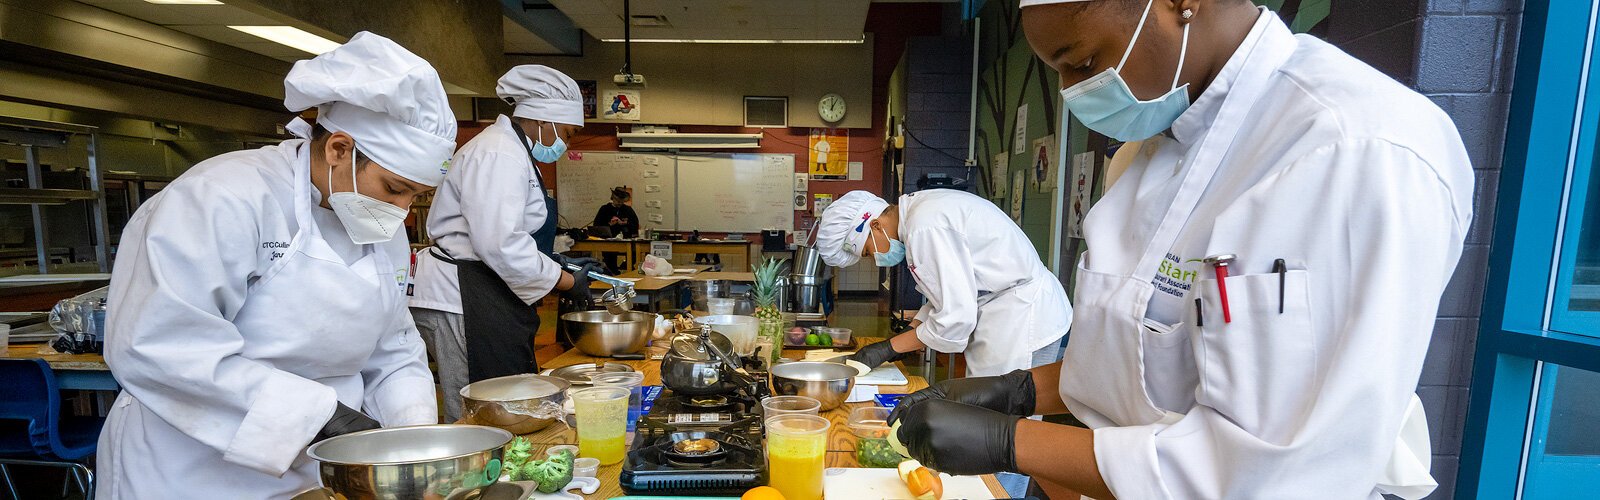 Ypsilanti Community High School students at the RCTC culinary arts program.